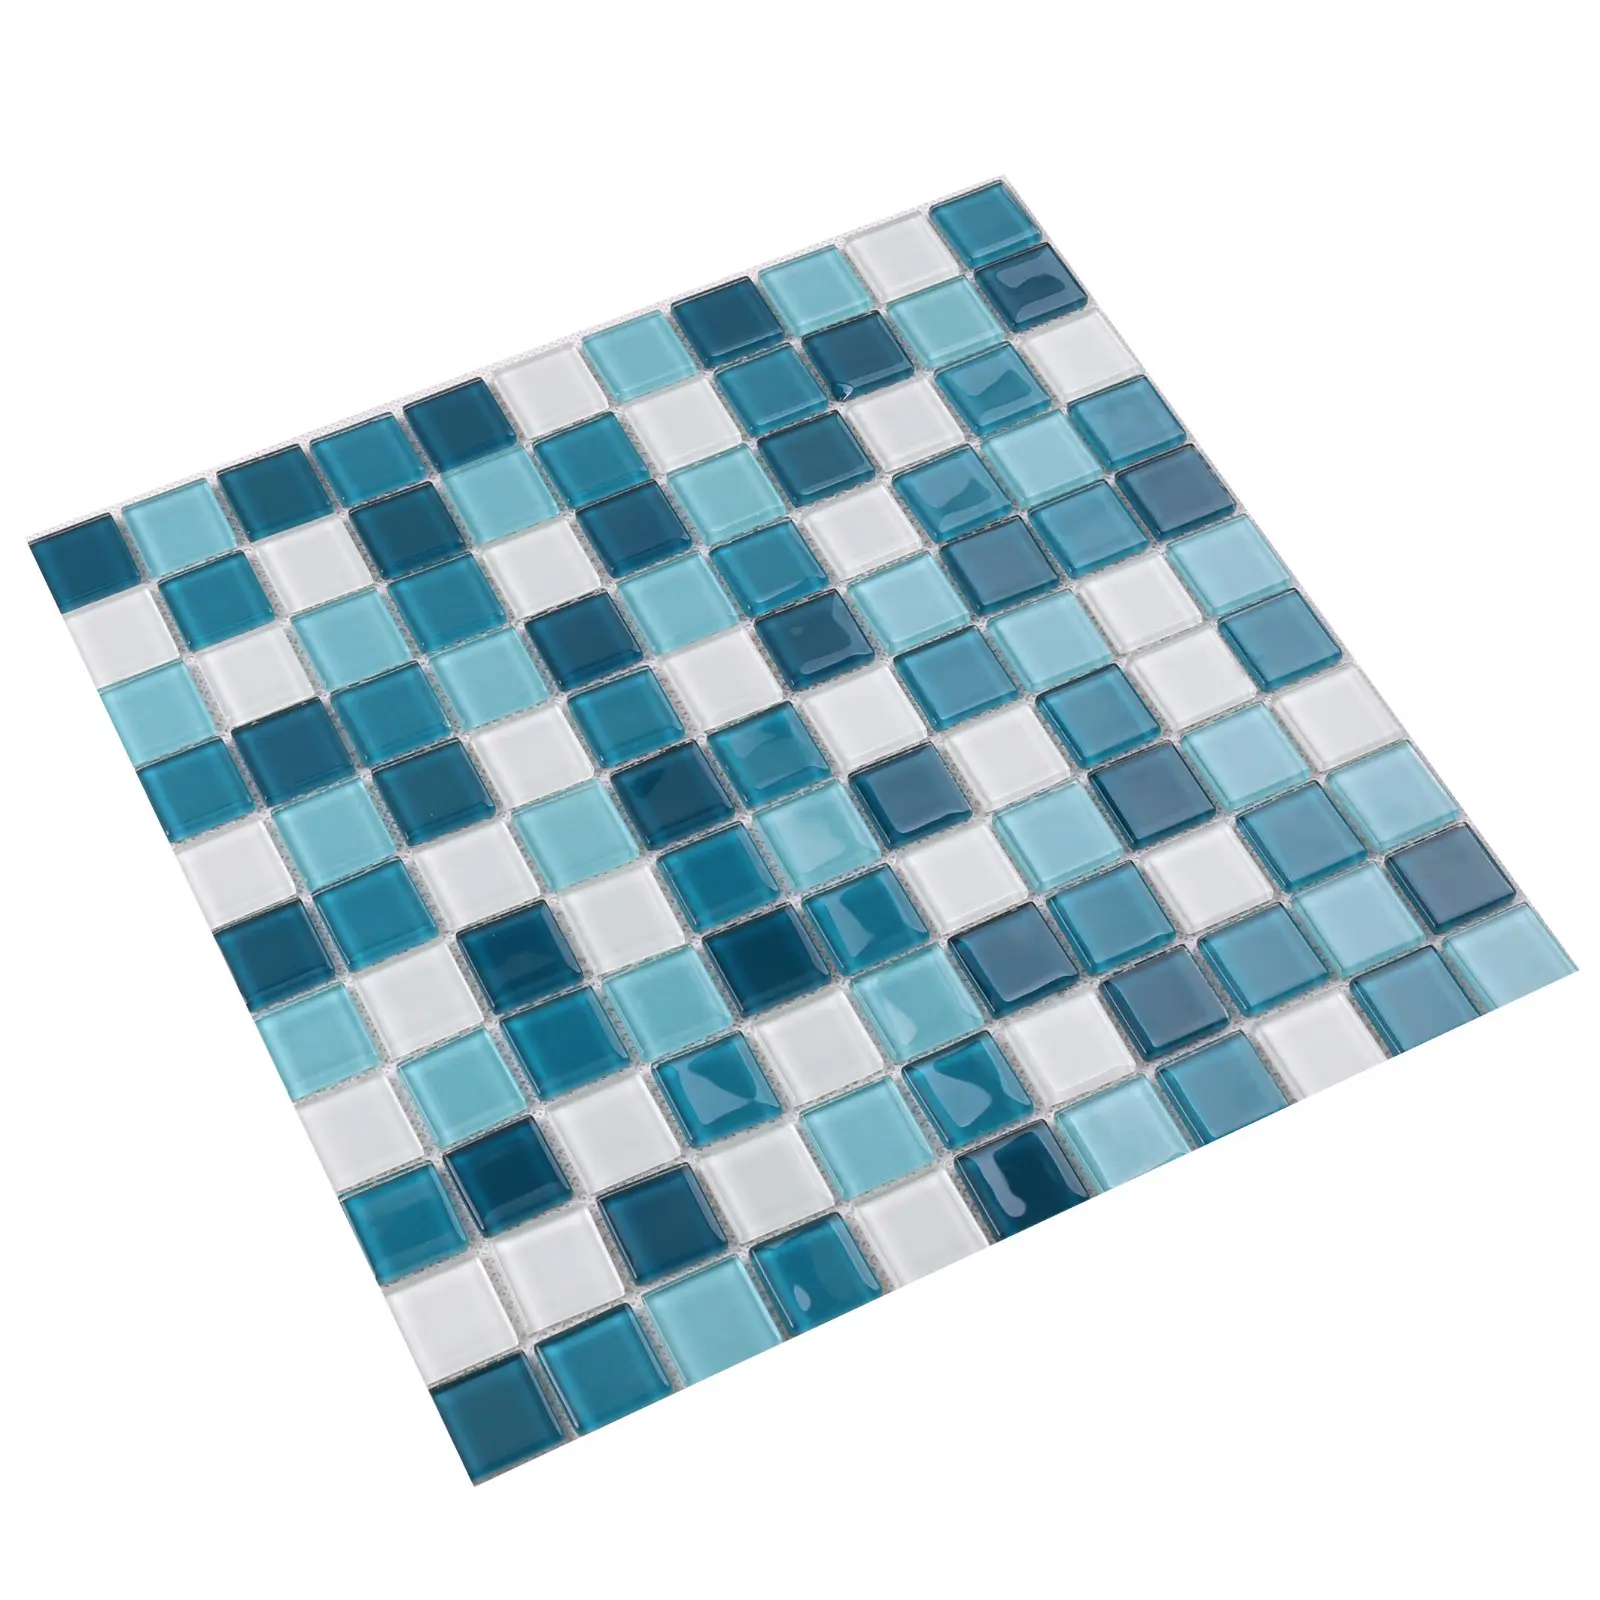 surround ceramic pool tile $ deck factory price for bathroom